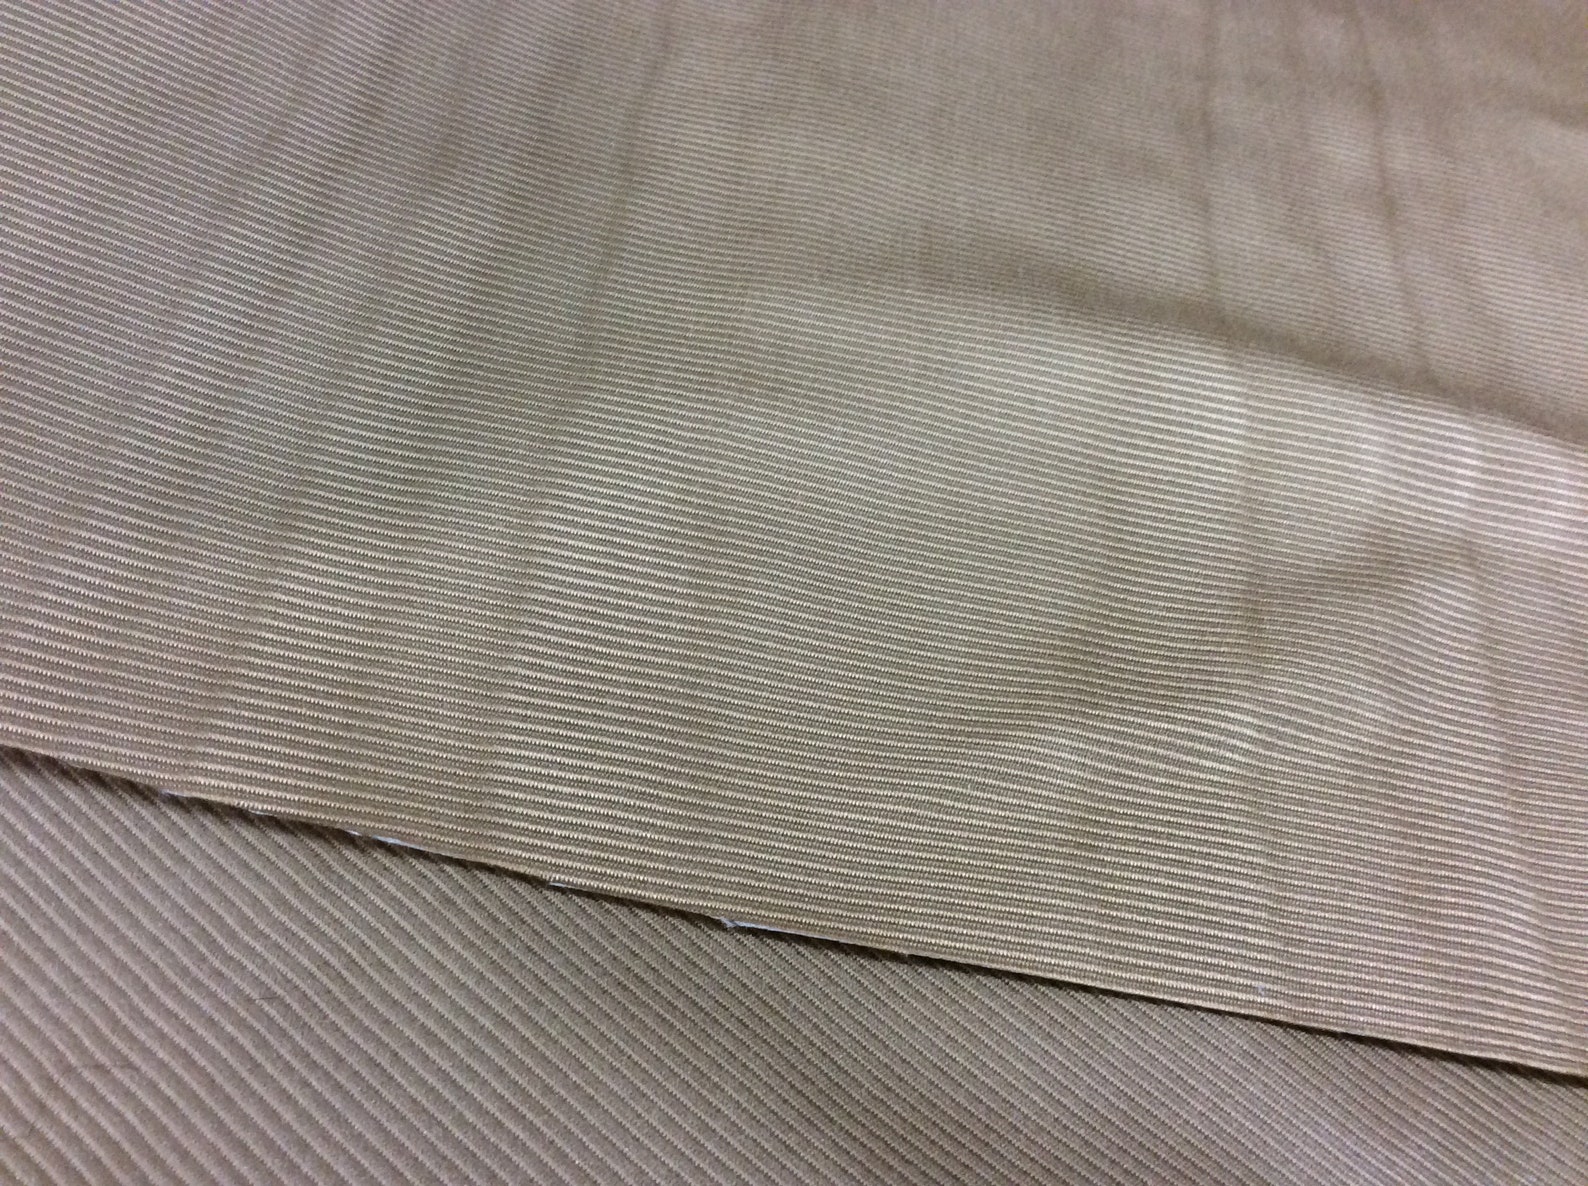 BTY Italian made medium brown moire satin drapery fabric | Etsy